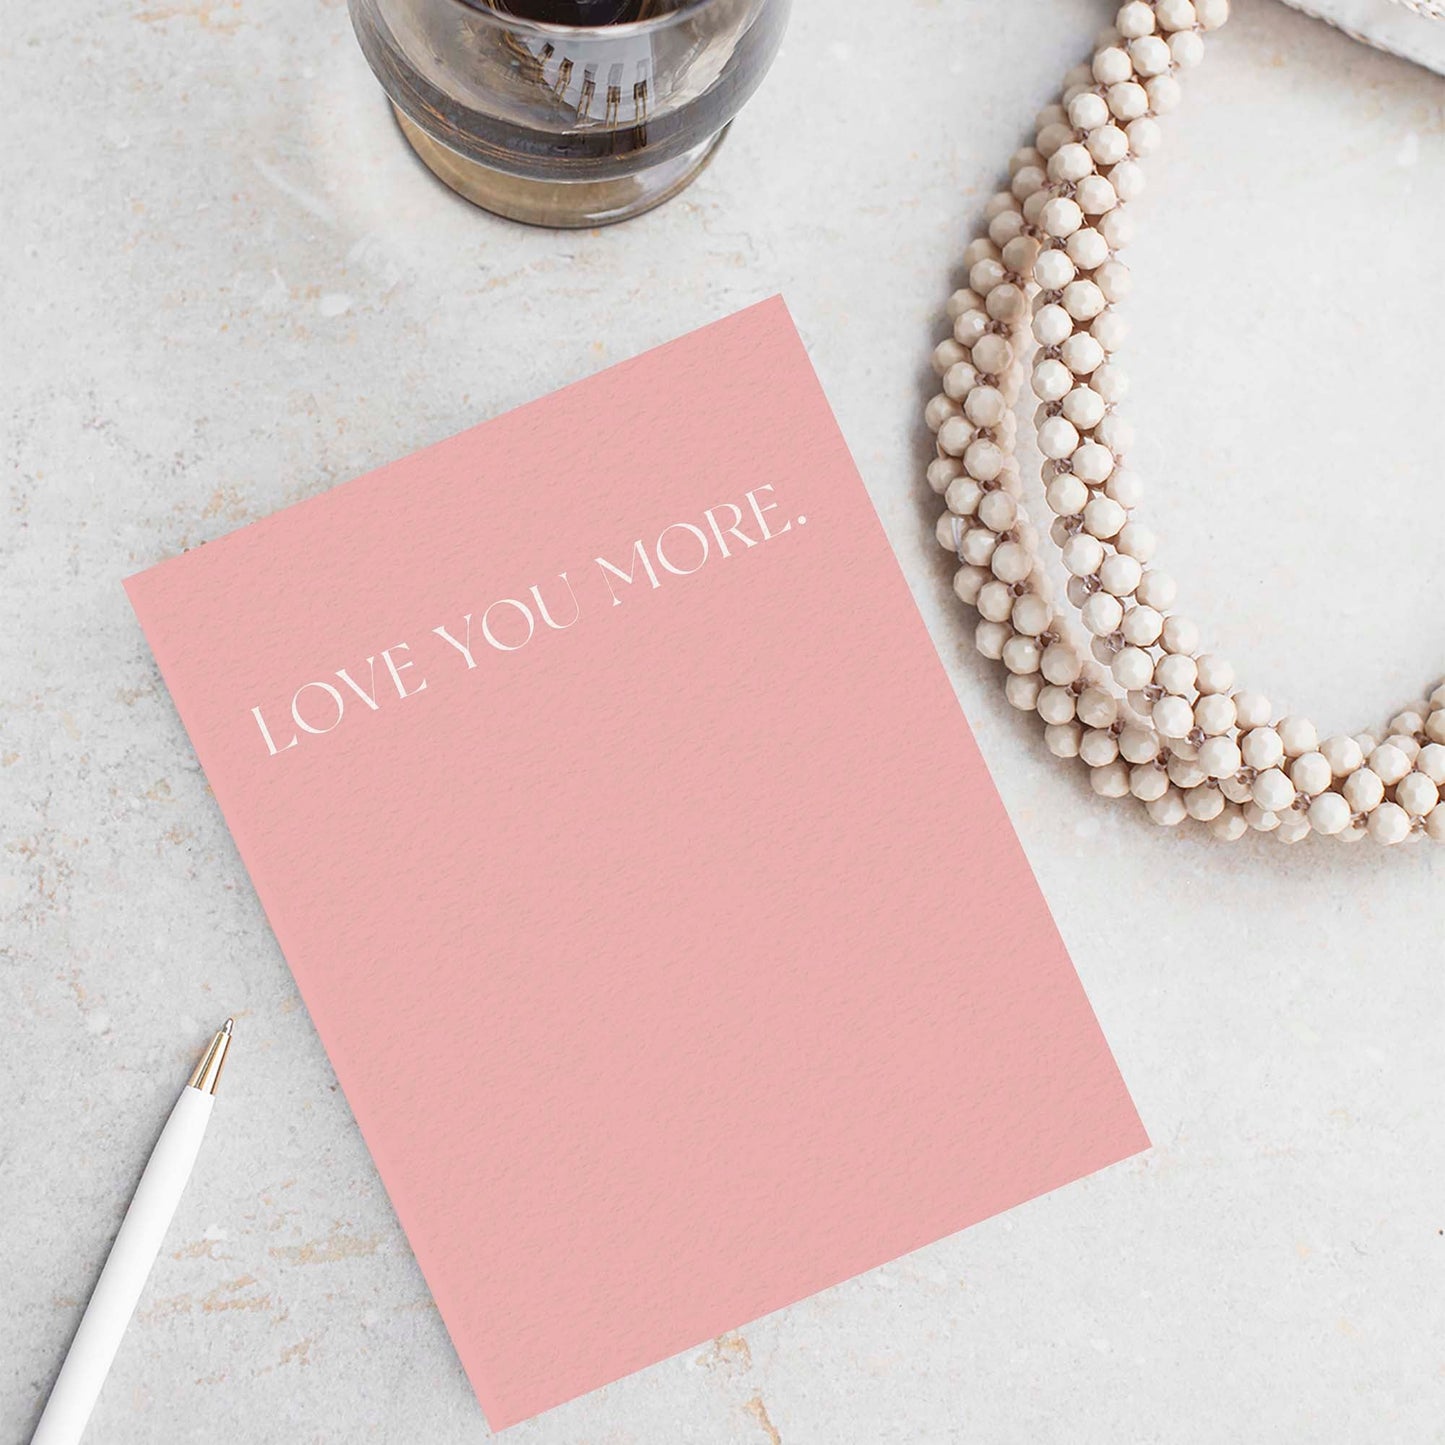 Love You More Card - Blú Rose